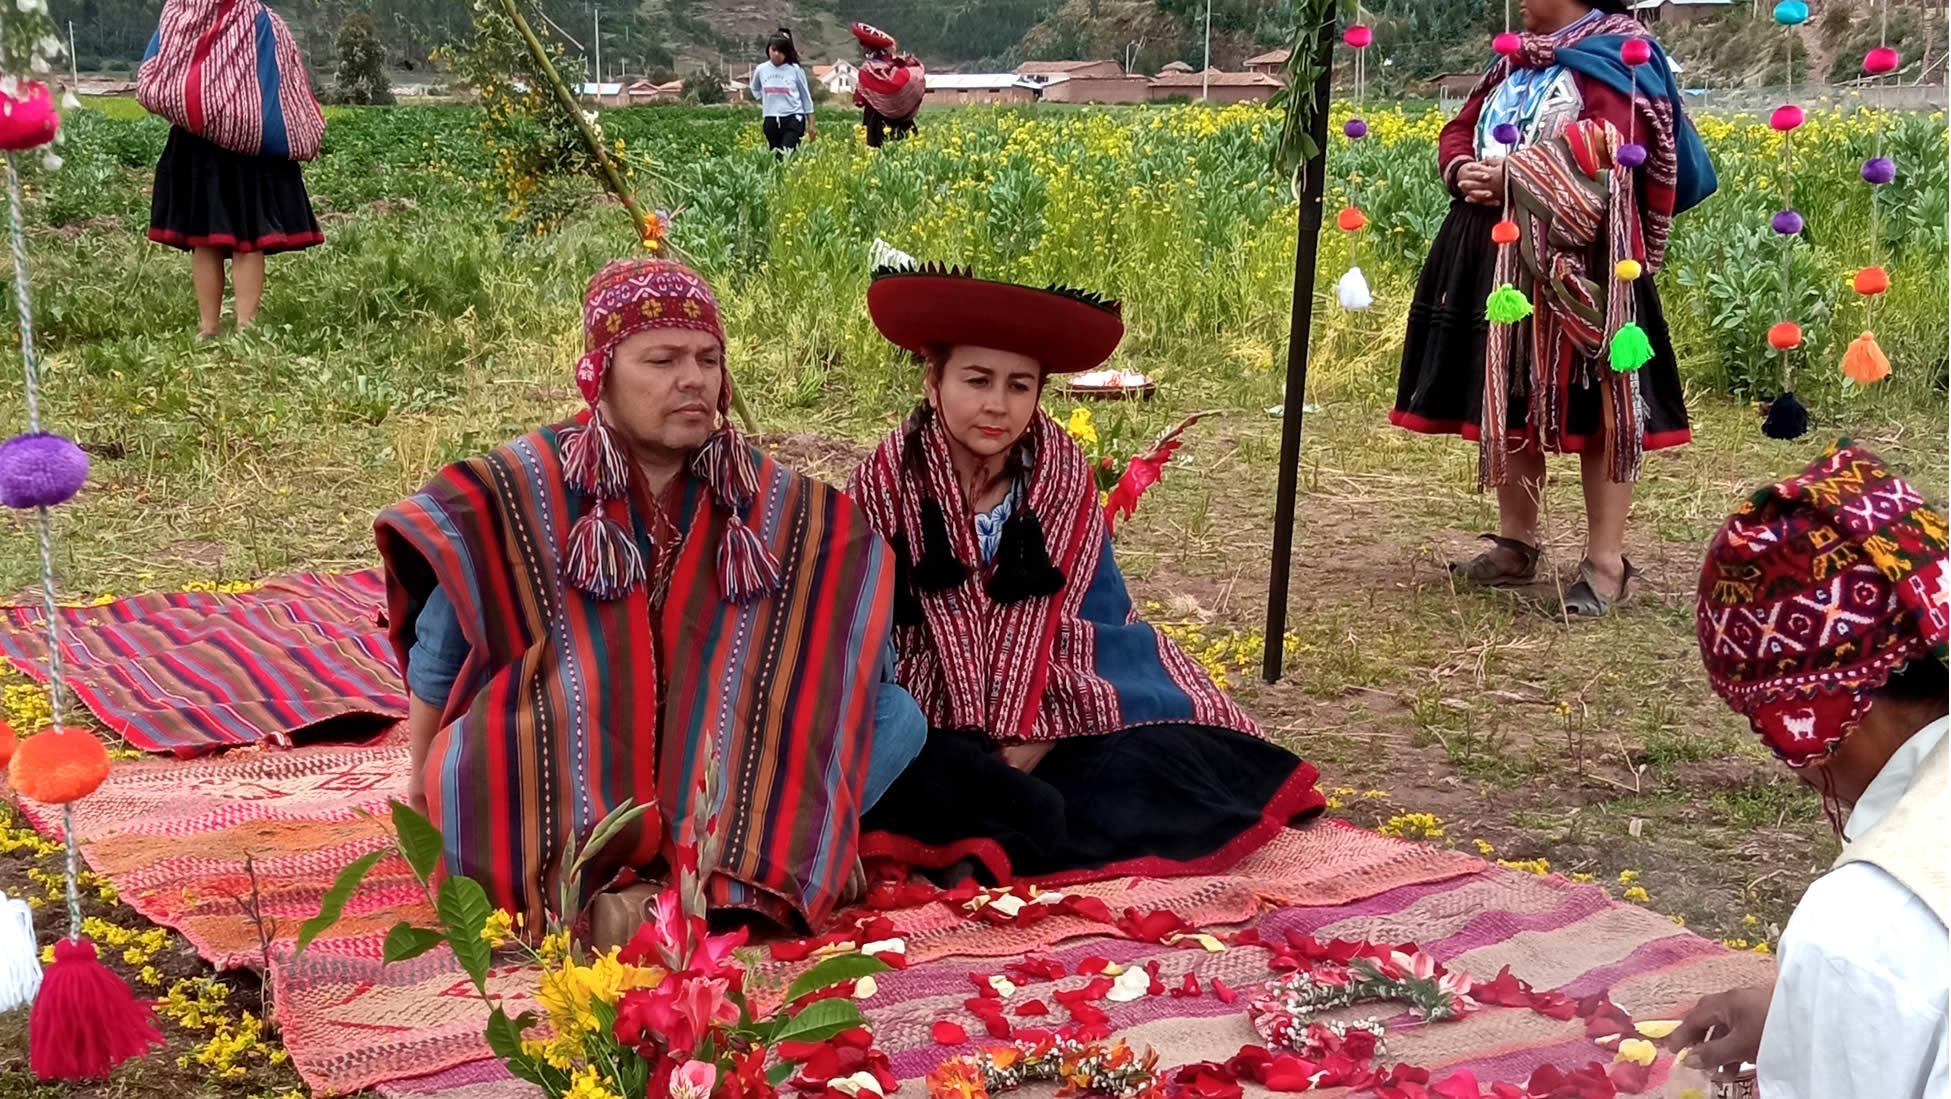 Matrimonio en Machu Picchu